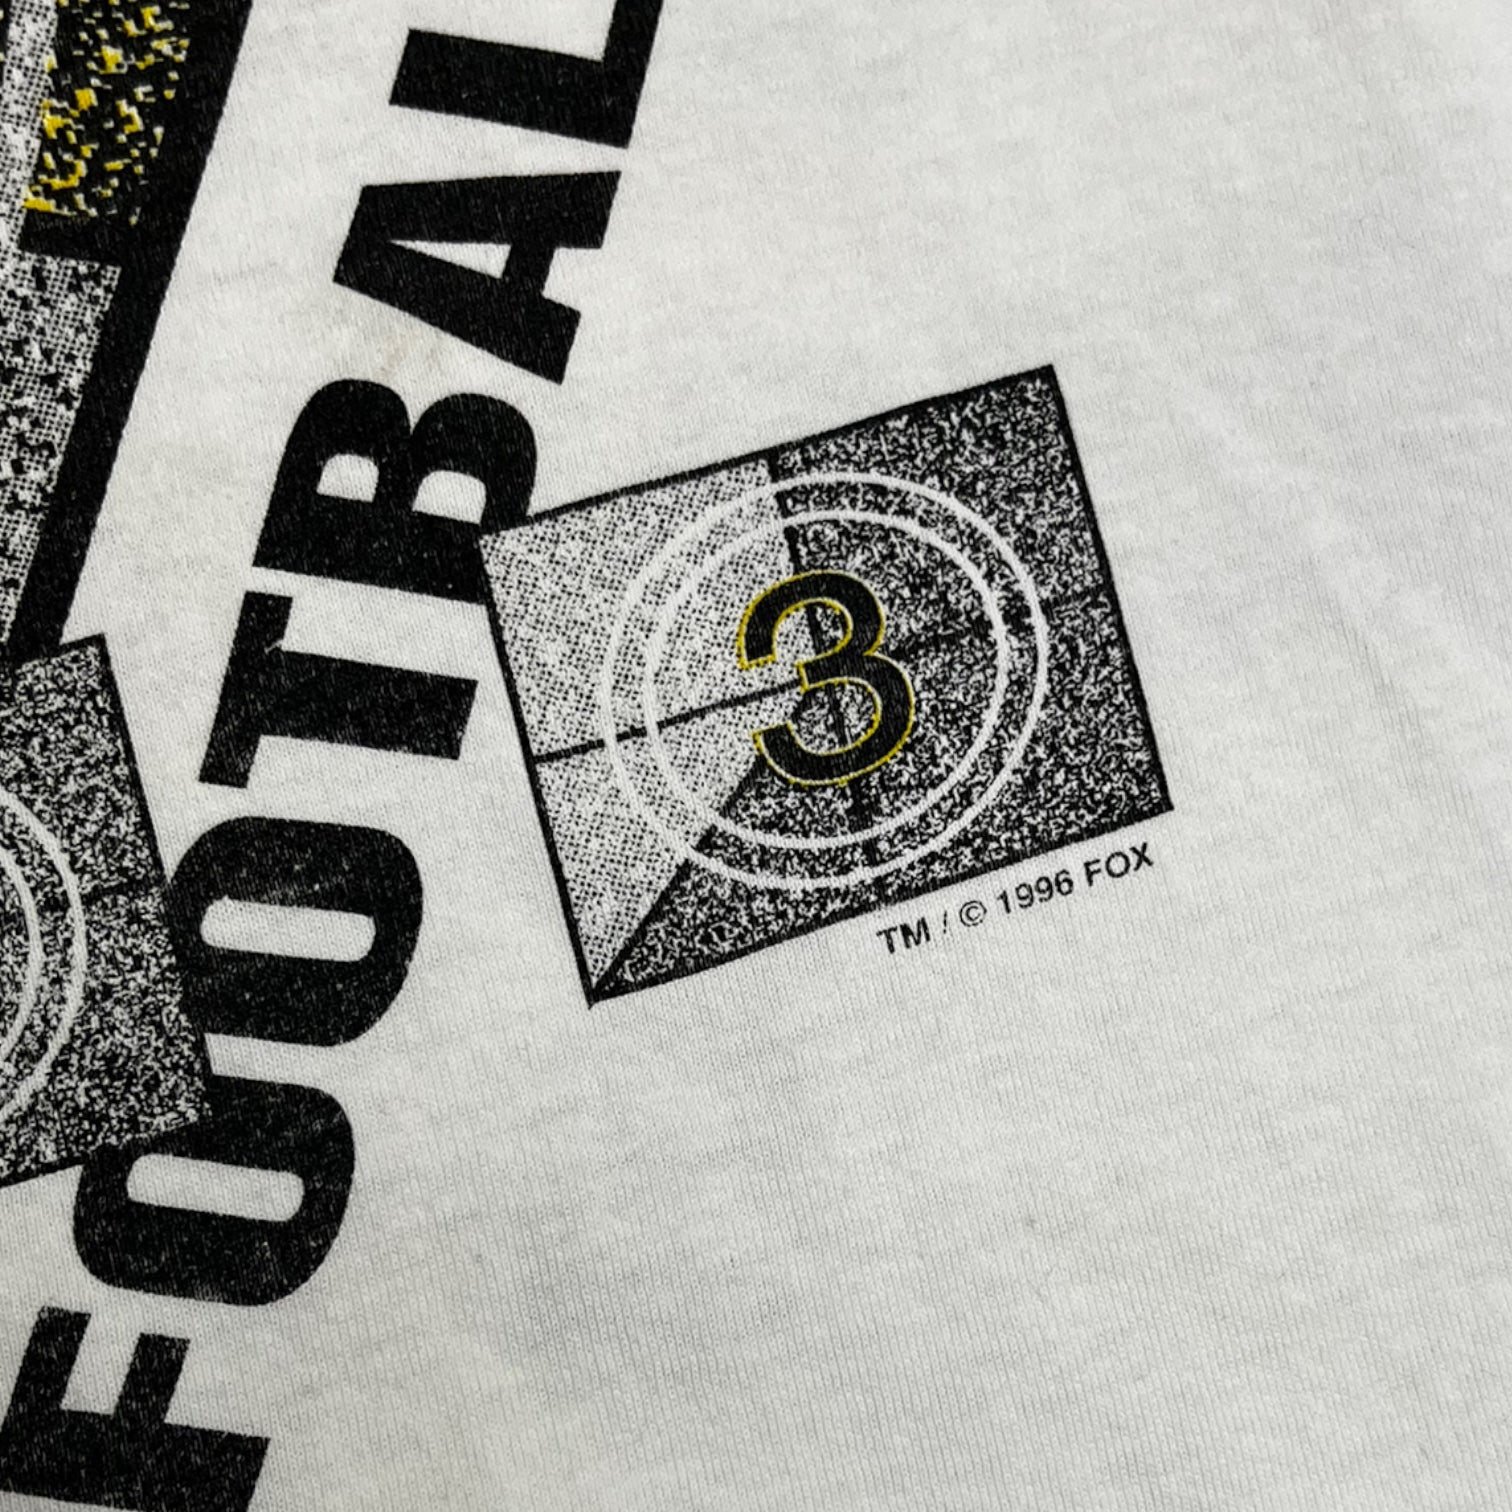 1996 Pittsburgh Steelers “NFL On FOX” T-Shirt